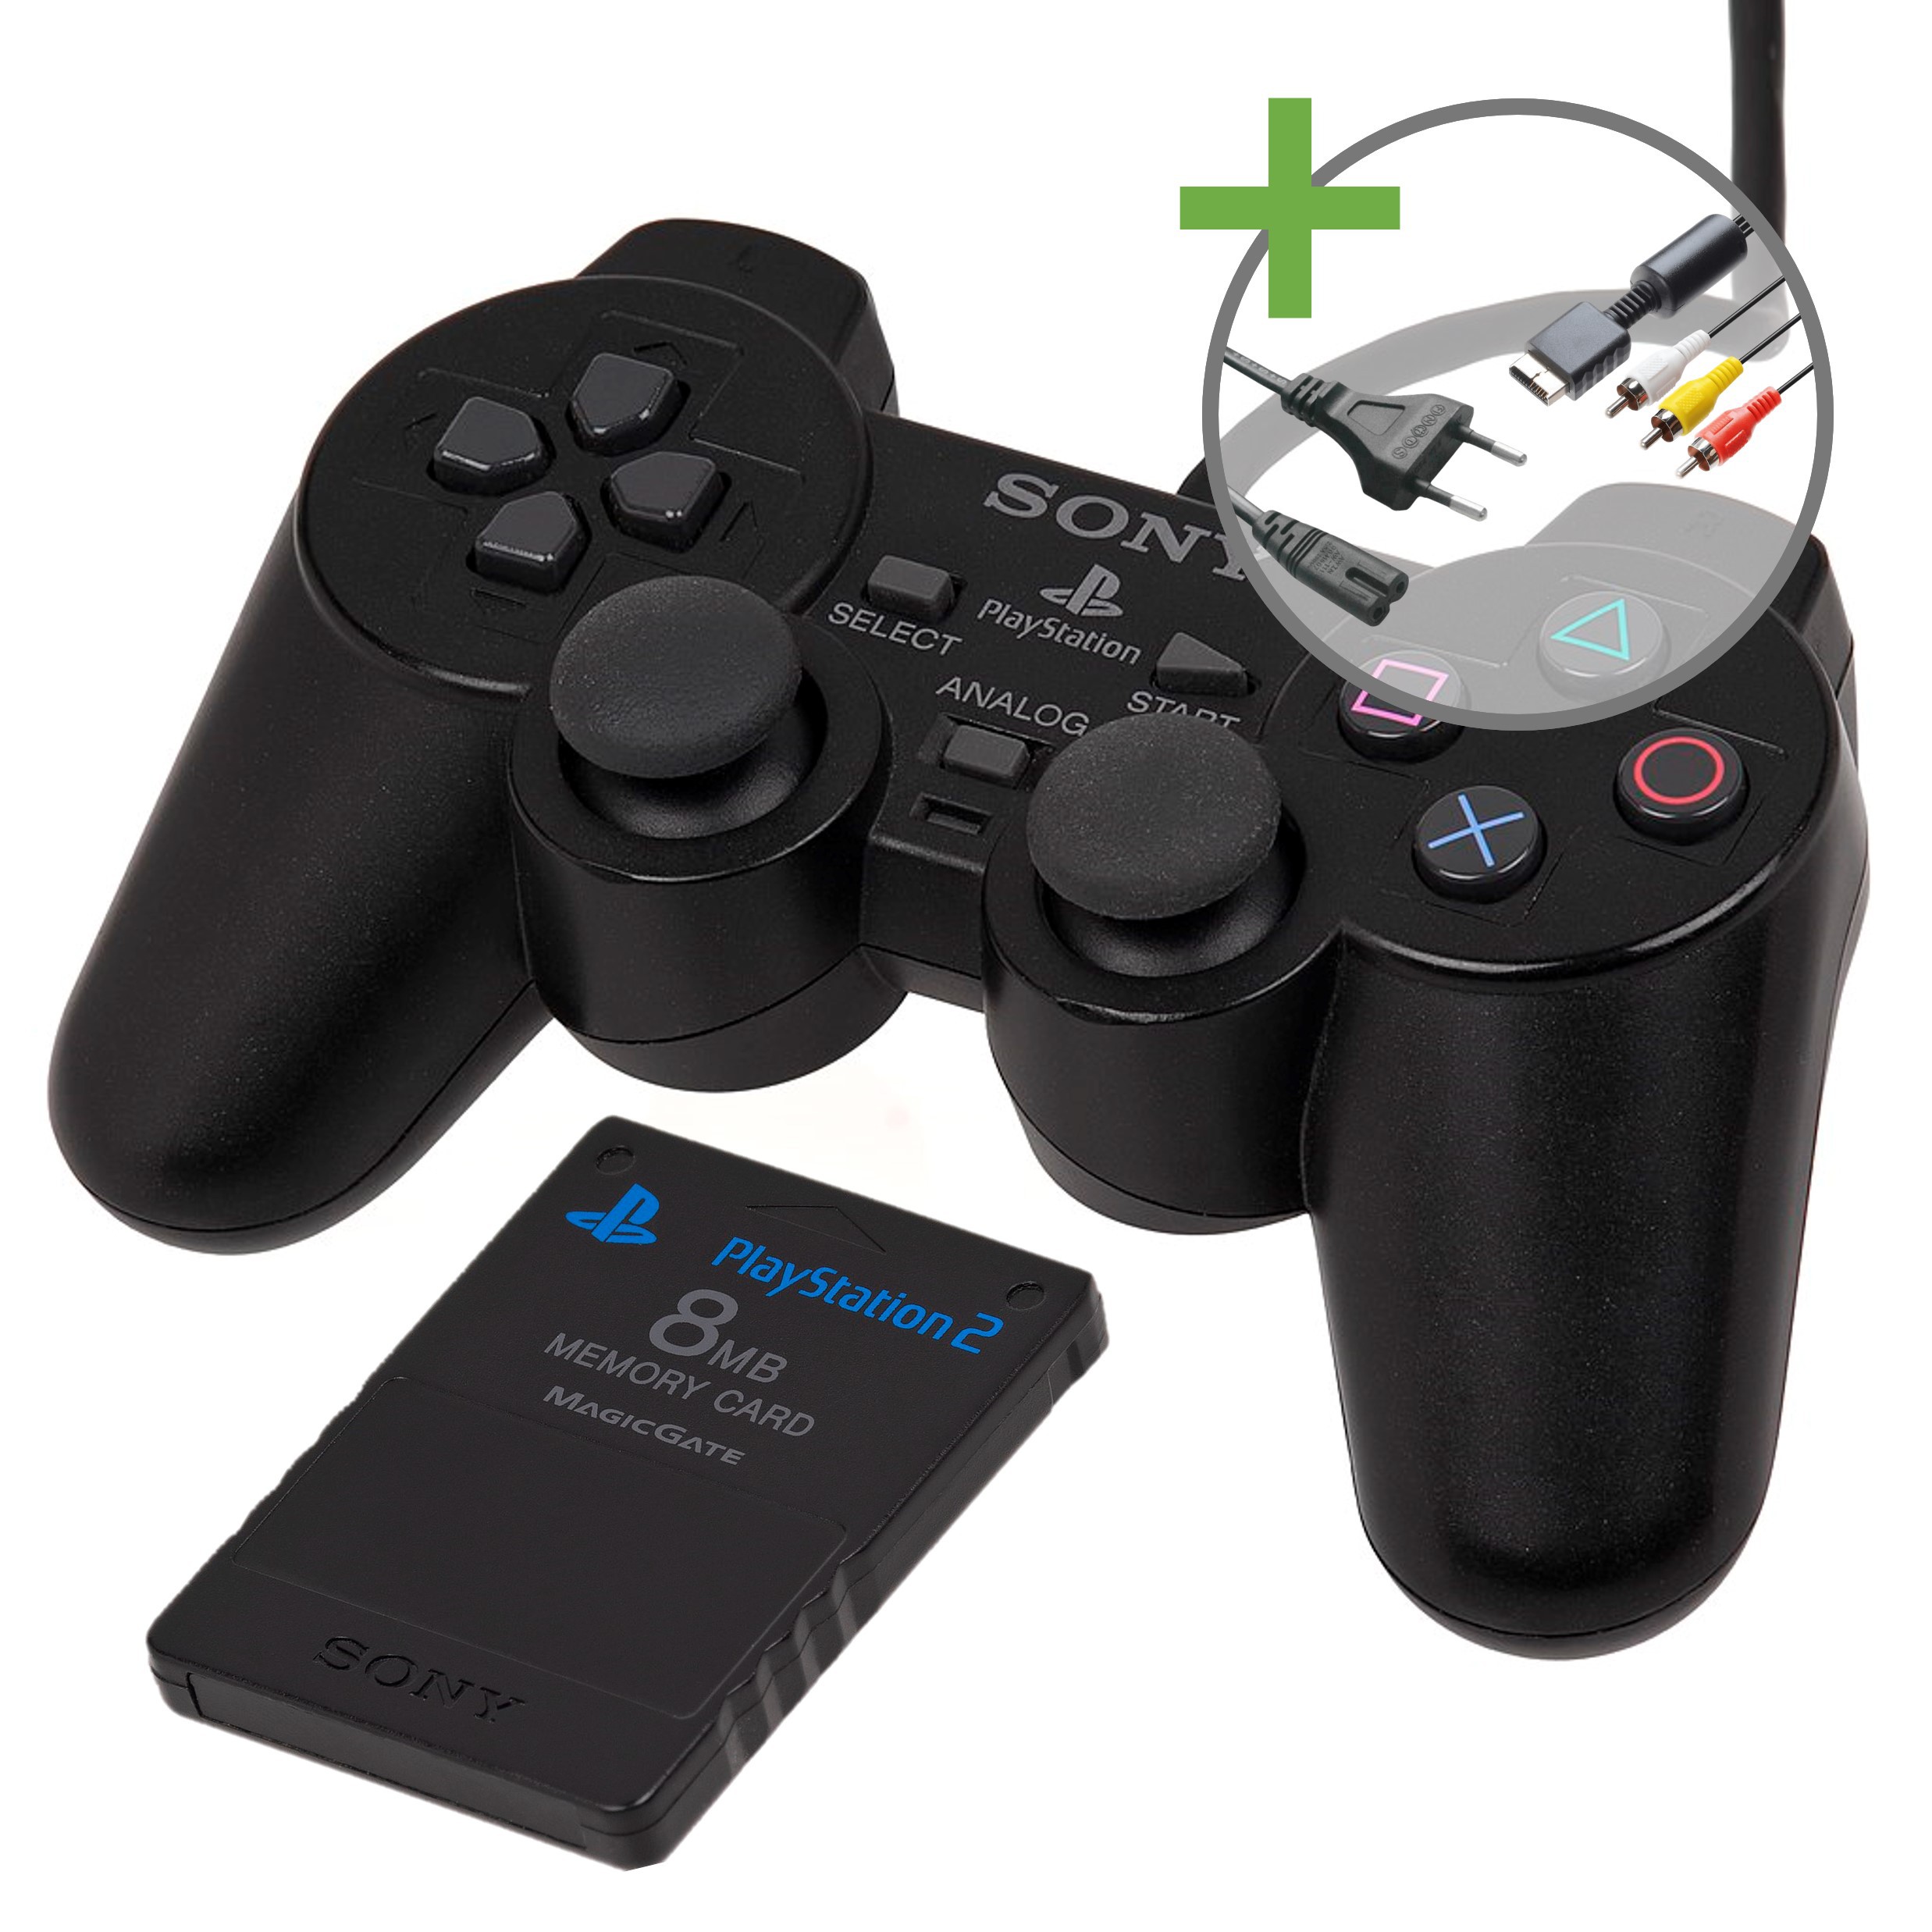 Sony PlayStation 2 Slim Starter Pack - Black Edition - Playstation 2 Hardware - 4